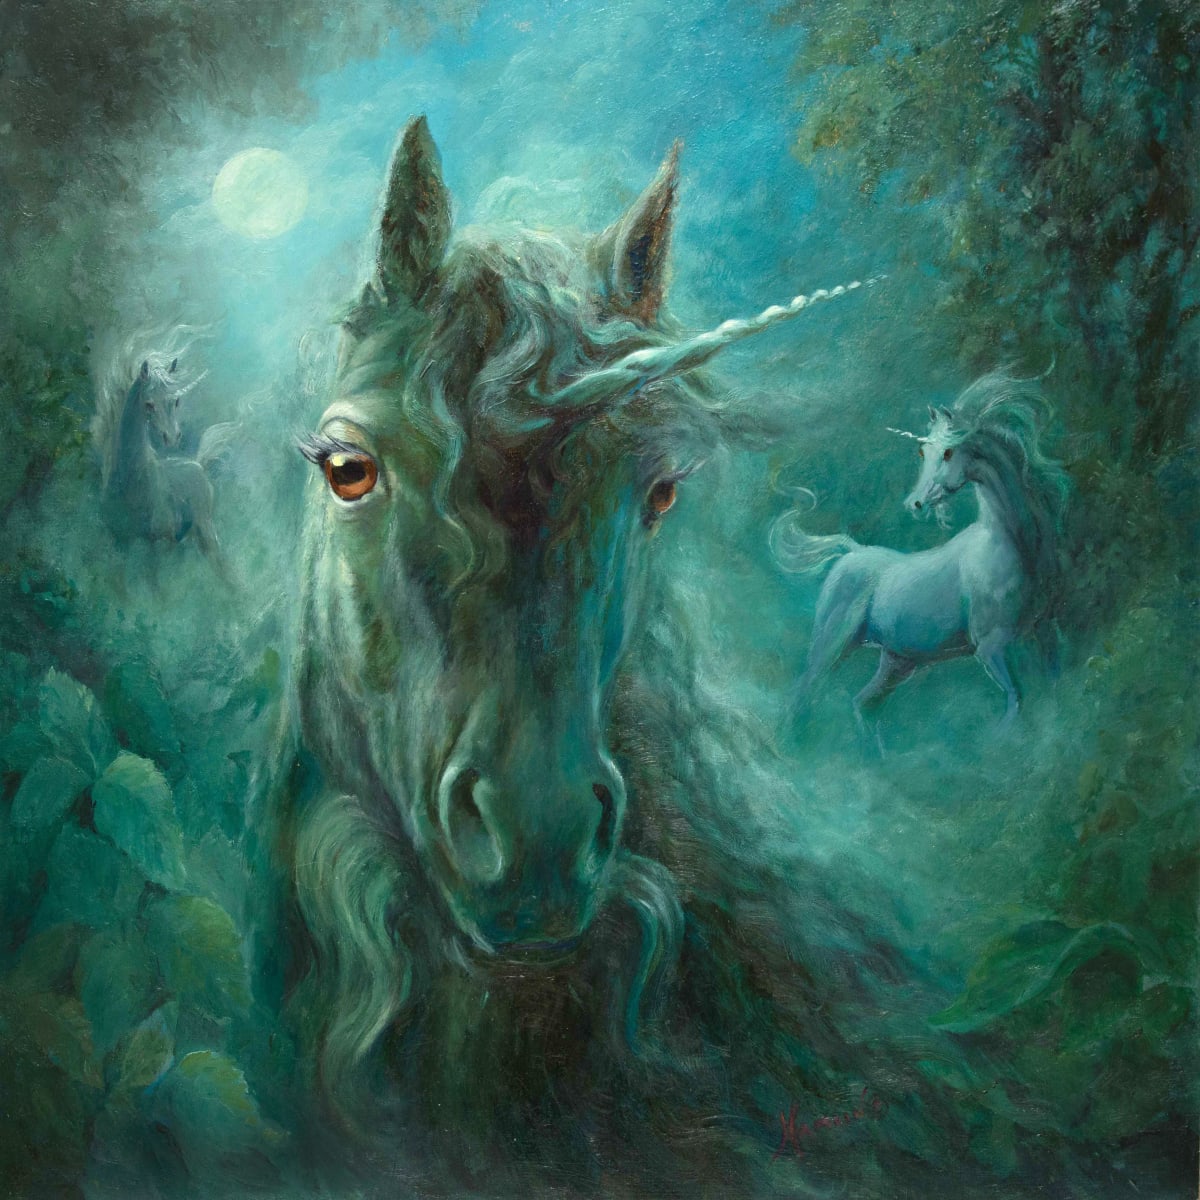 Sapphire Mist by Bonnie Hamlin  Image: Unicorns dancing magically
Bringing us peace and harmony